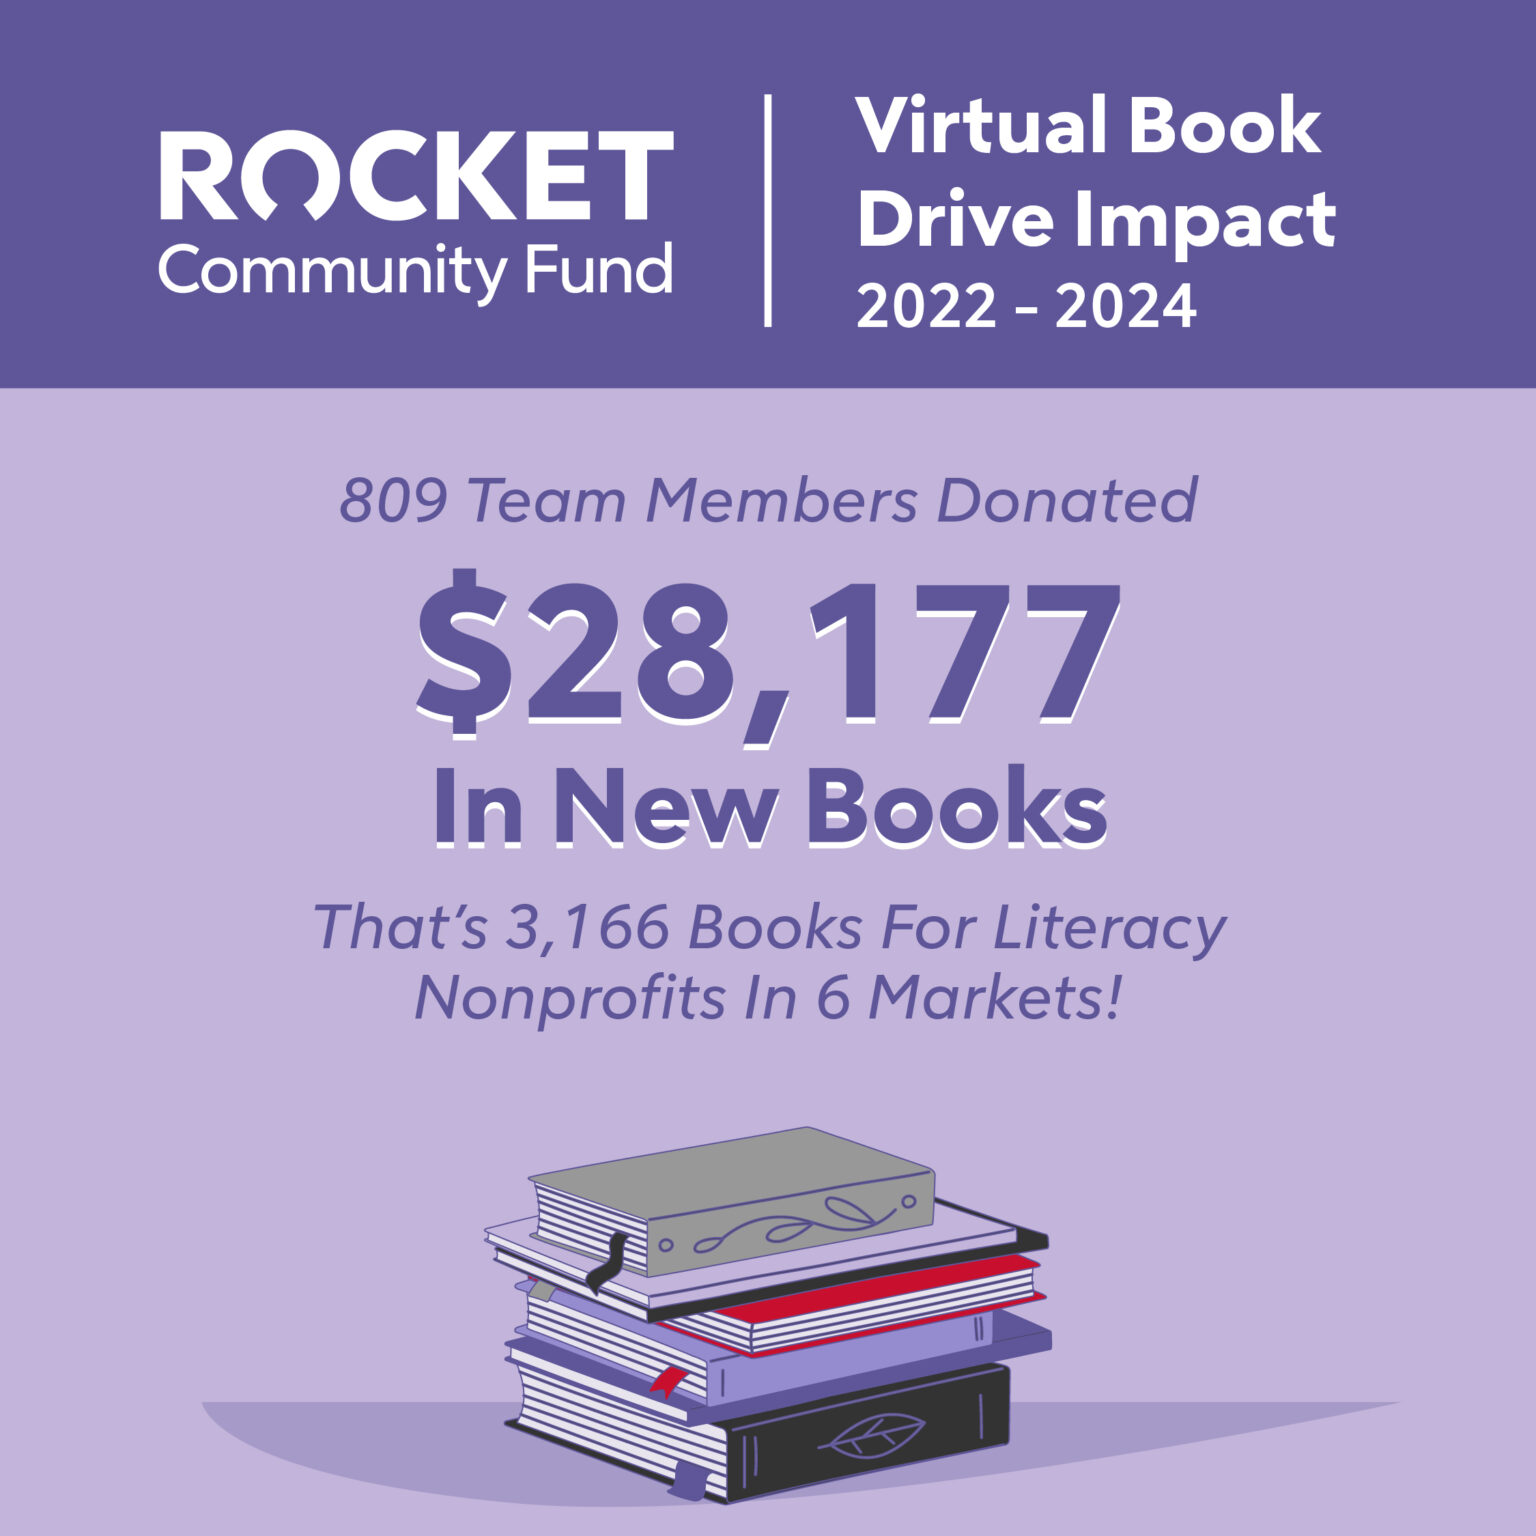 Team Members Support Literacy Efforts Through Virtual Book Drive ...